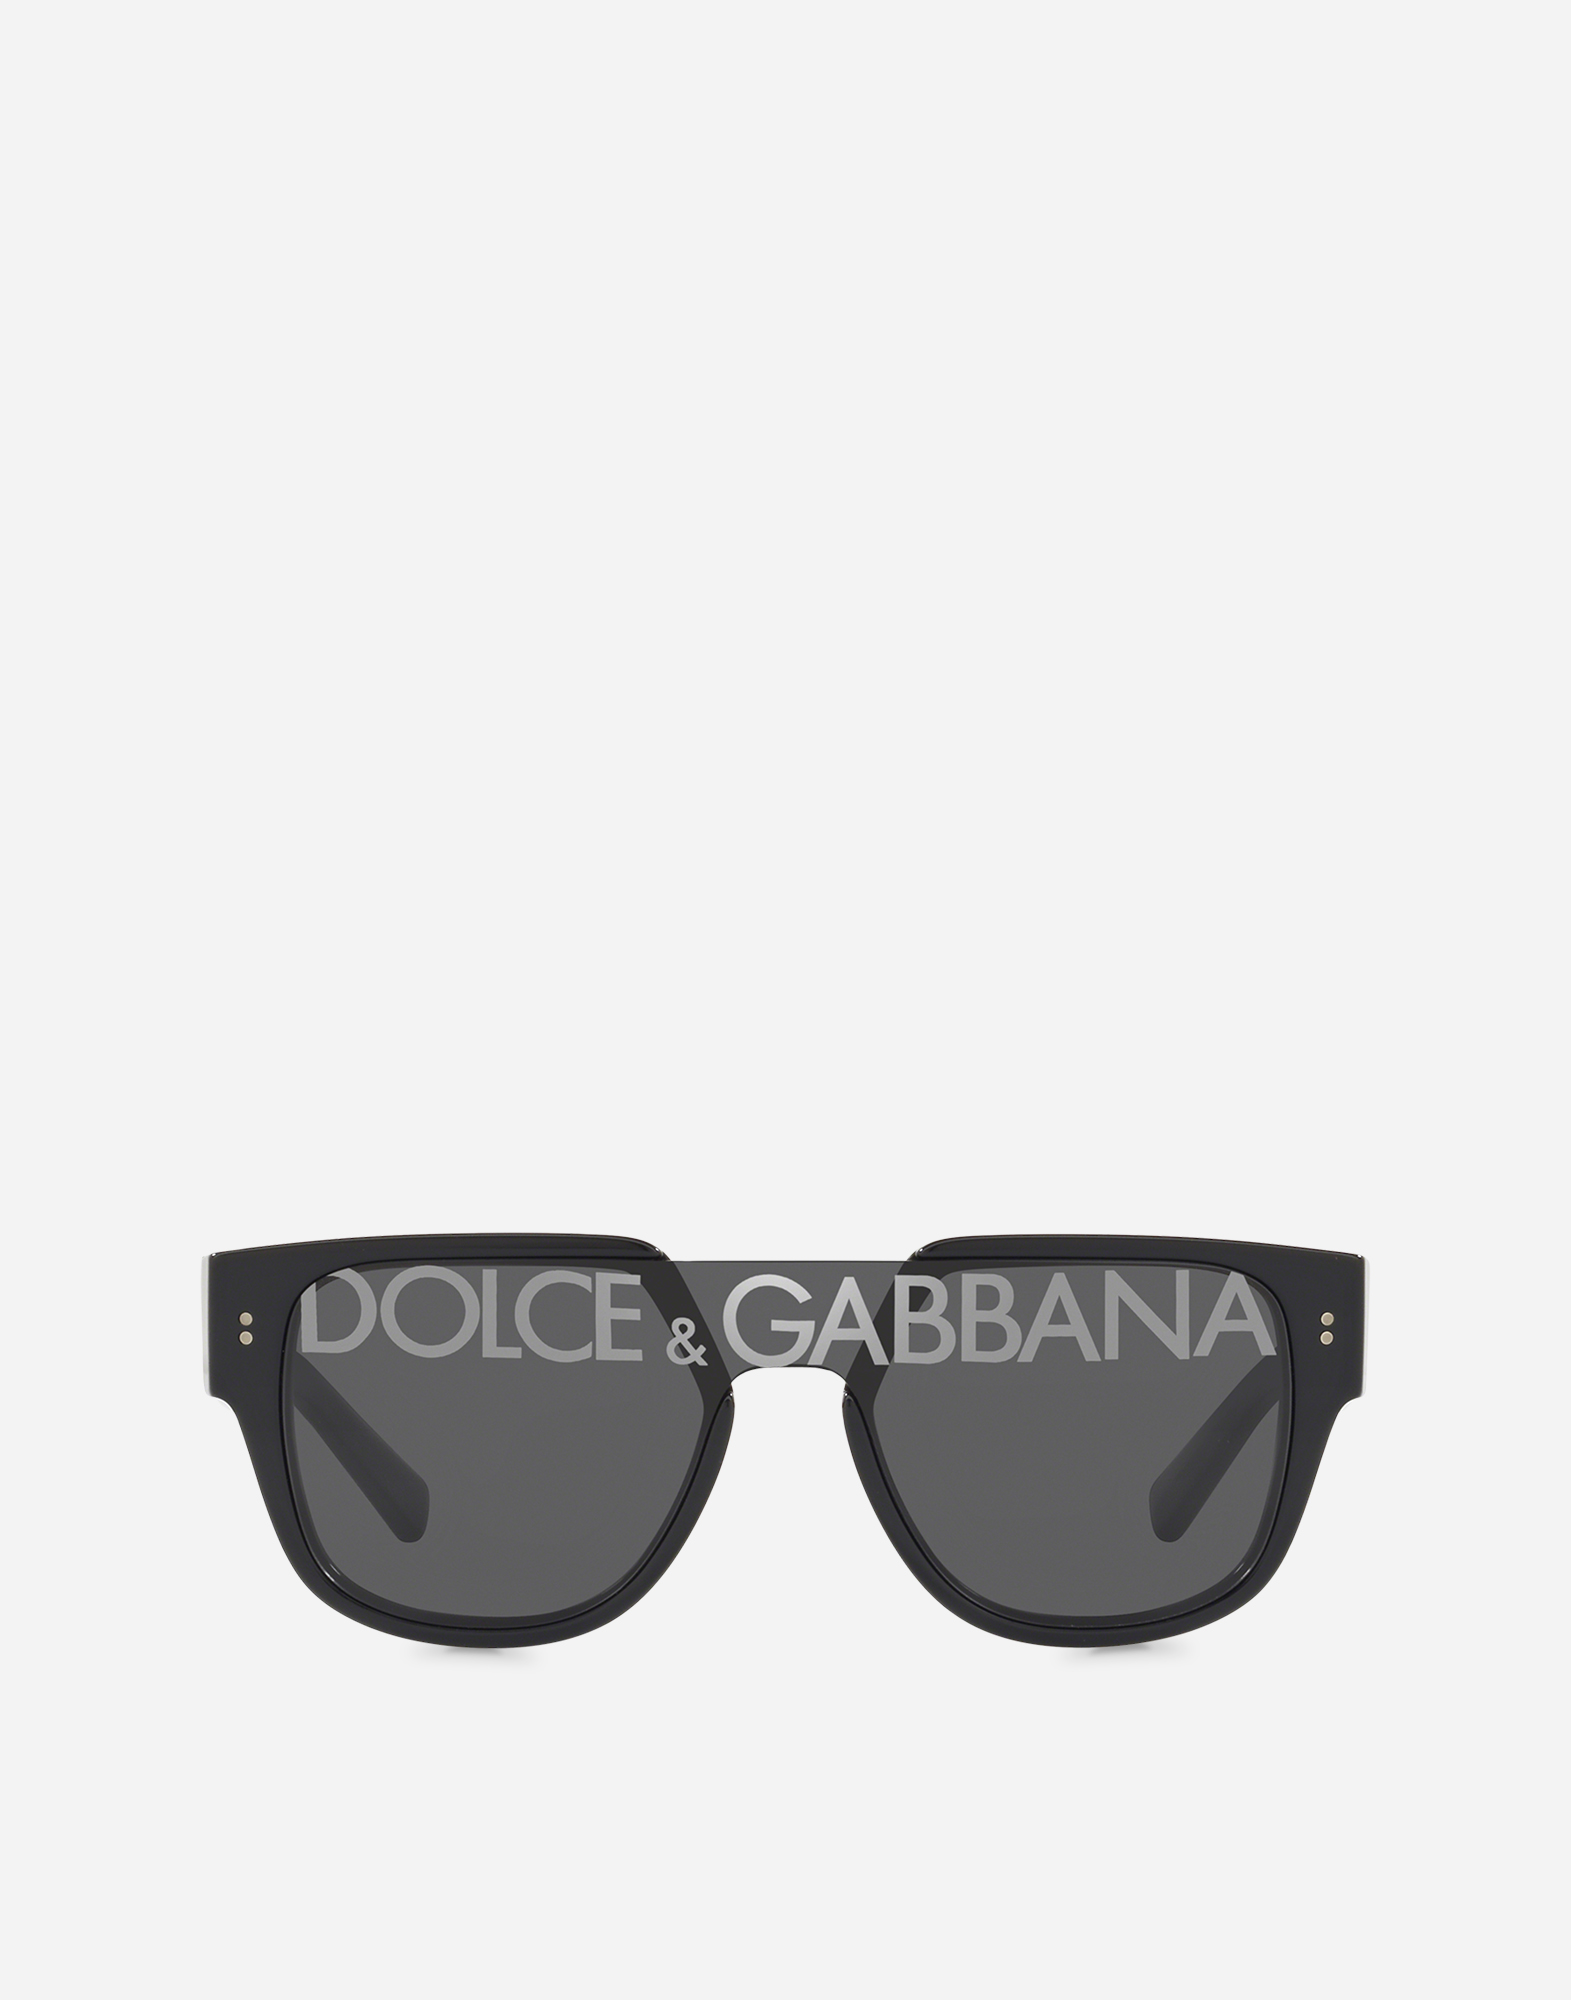 dolce gabbana new sunglasses